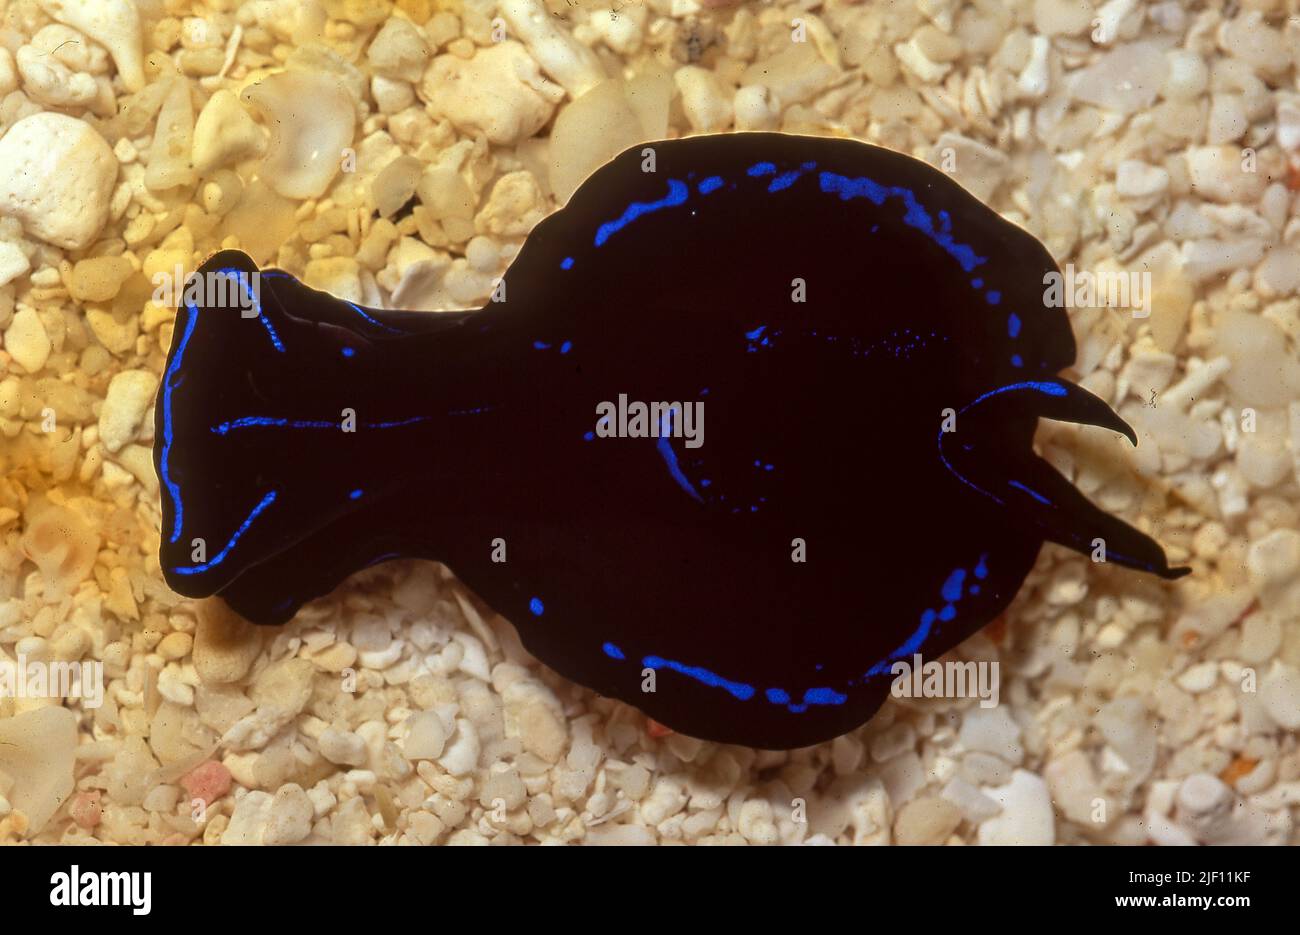 Gardiner's headshield slug (Tubulophilinopsis gardineri) from shallow waters in the Maldives. Stock Photo